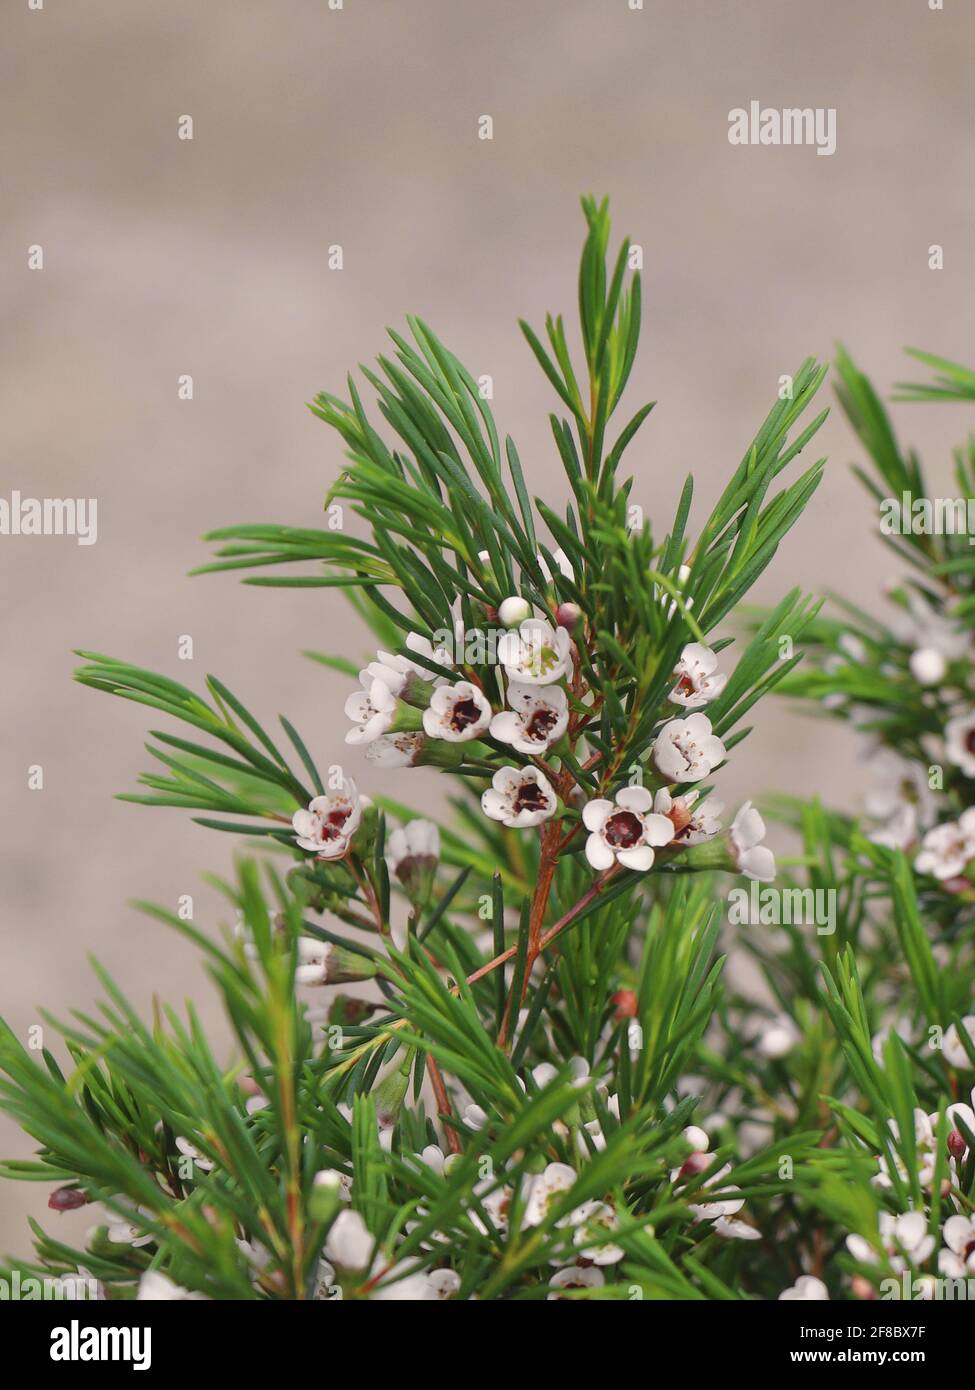 Topfpflanze Schneeflocke. Blühendes Chamelaucium Uncinatum. Chamelaucium uncinatum oder Wachsblume. Stockfoto